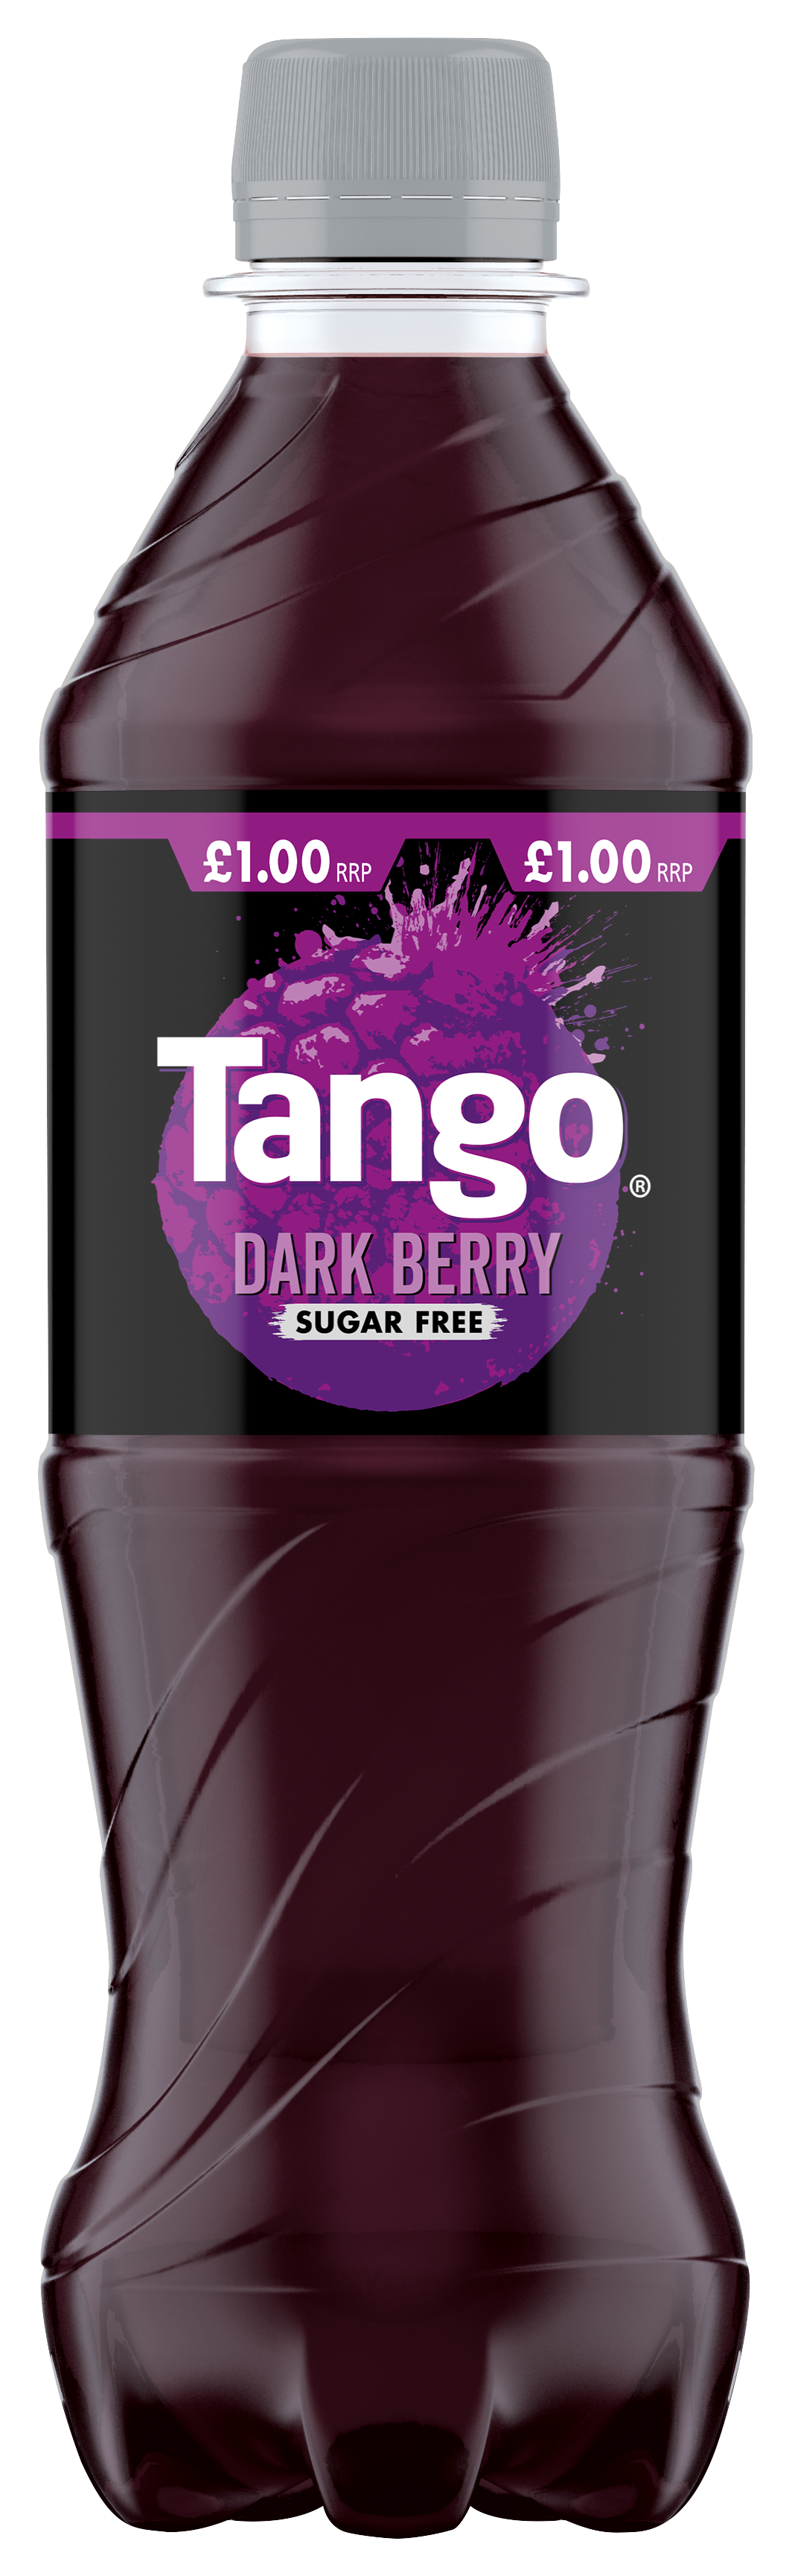 Tango extends sugar-free range  with dark berry flavour